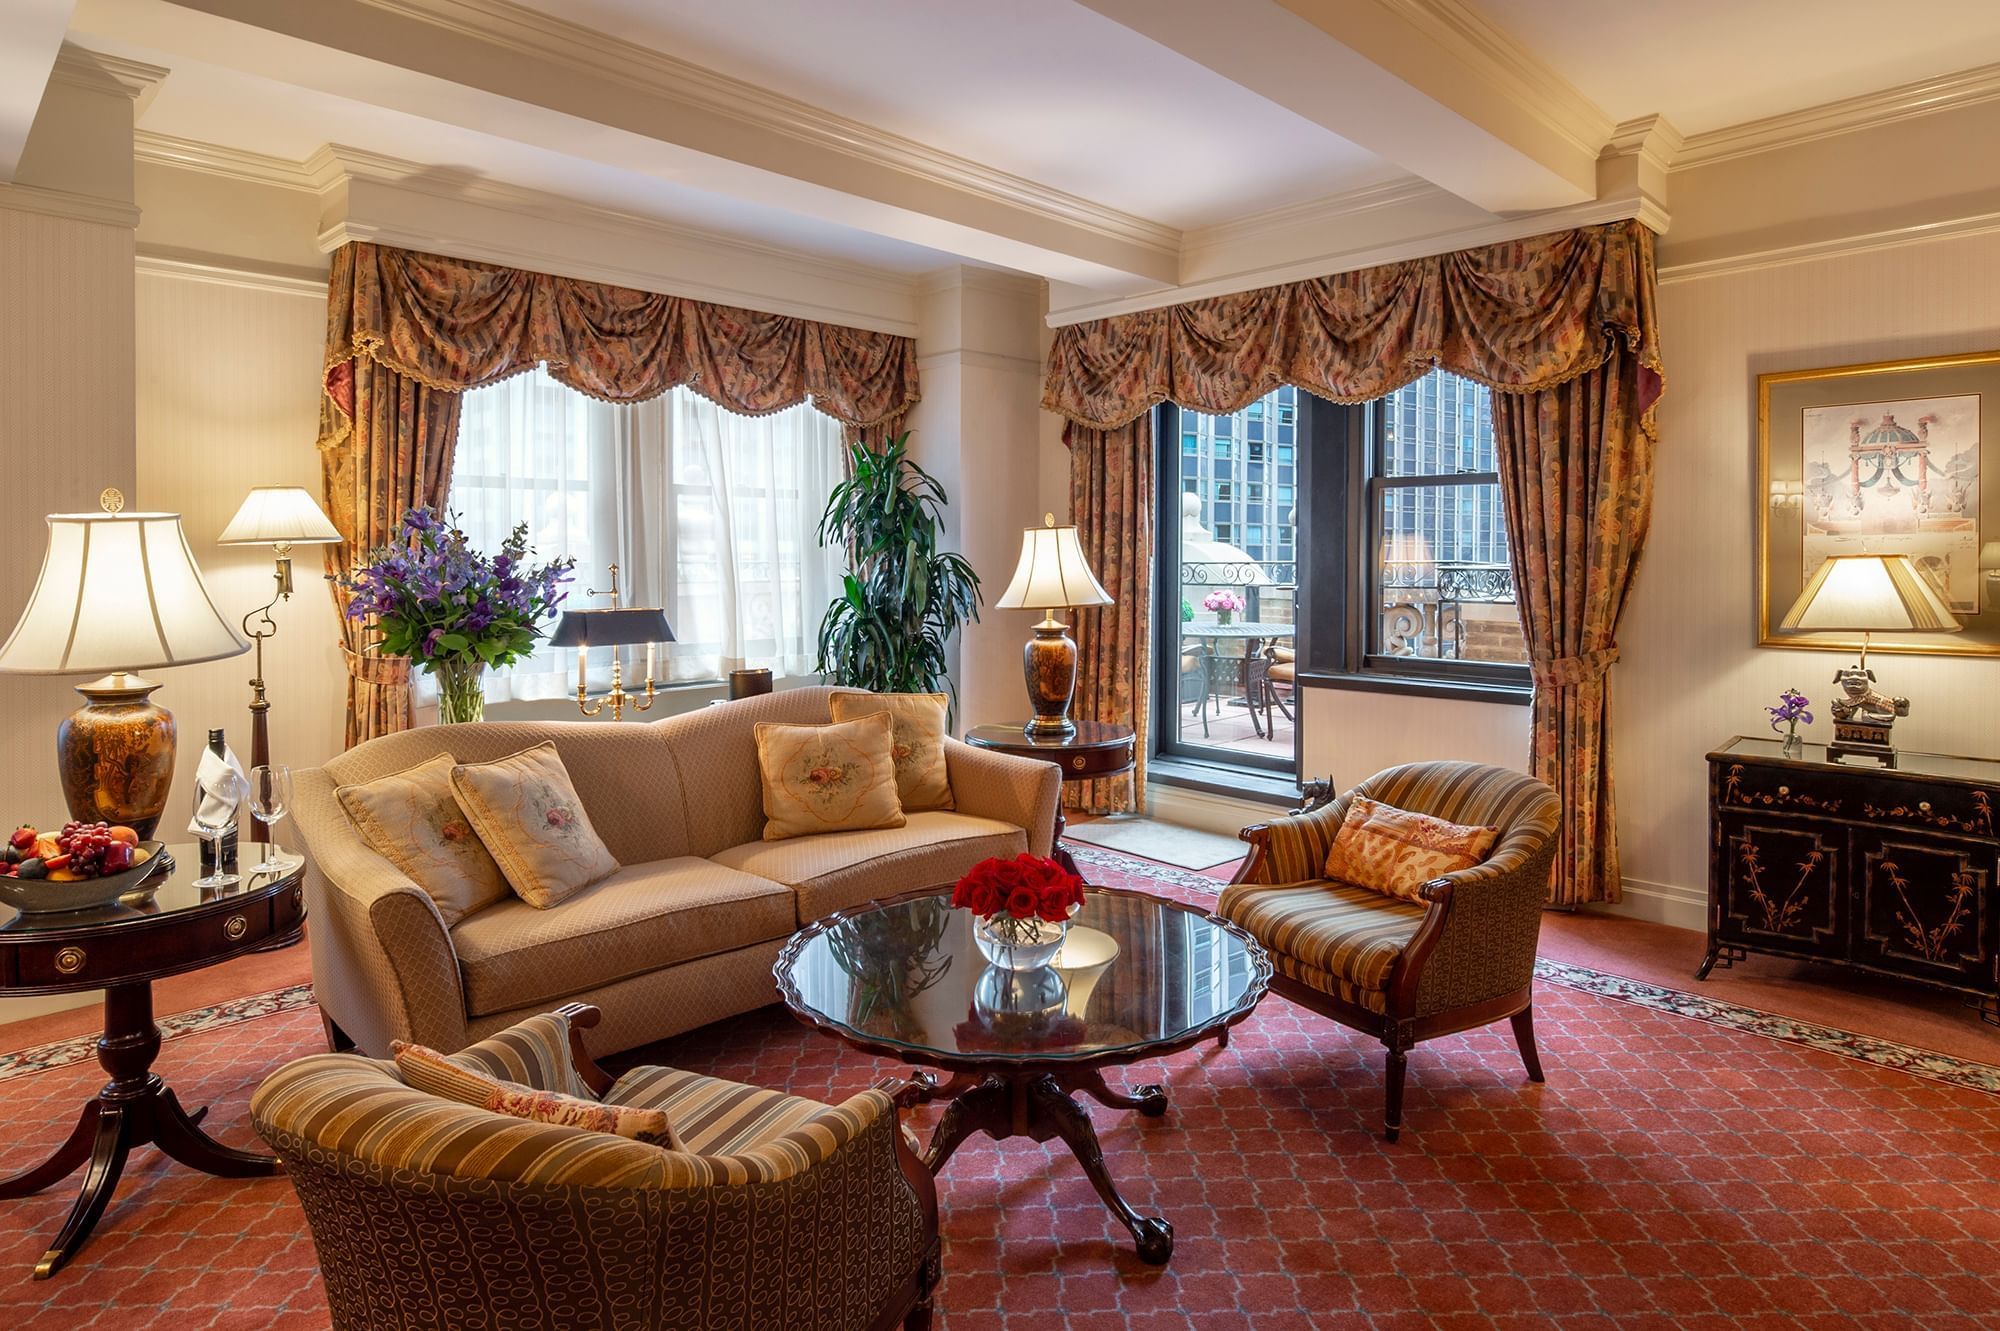 Rooms & Suites in New York